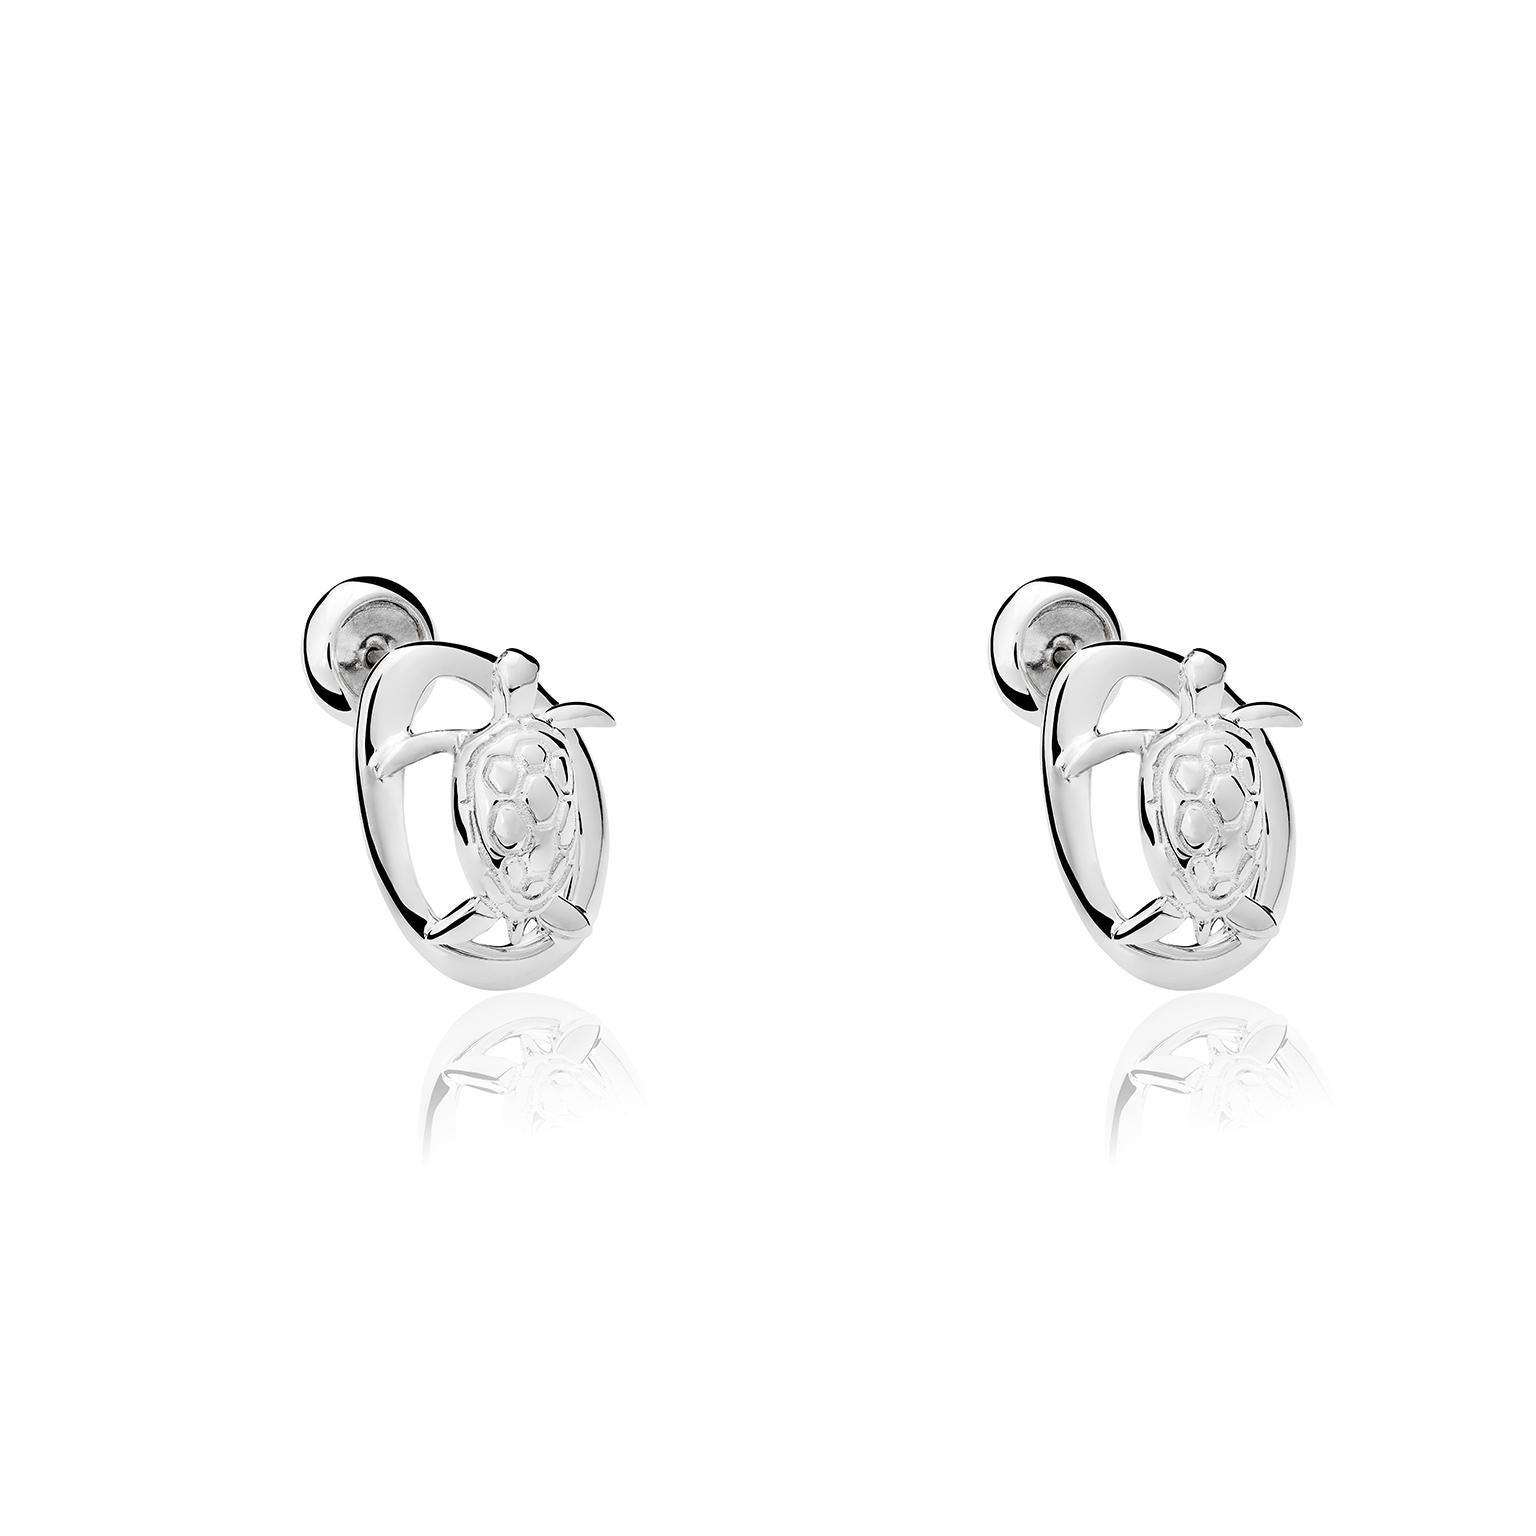 sterling silver turtle earring studs